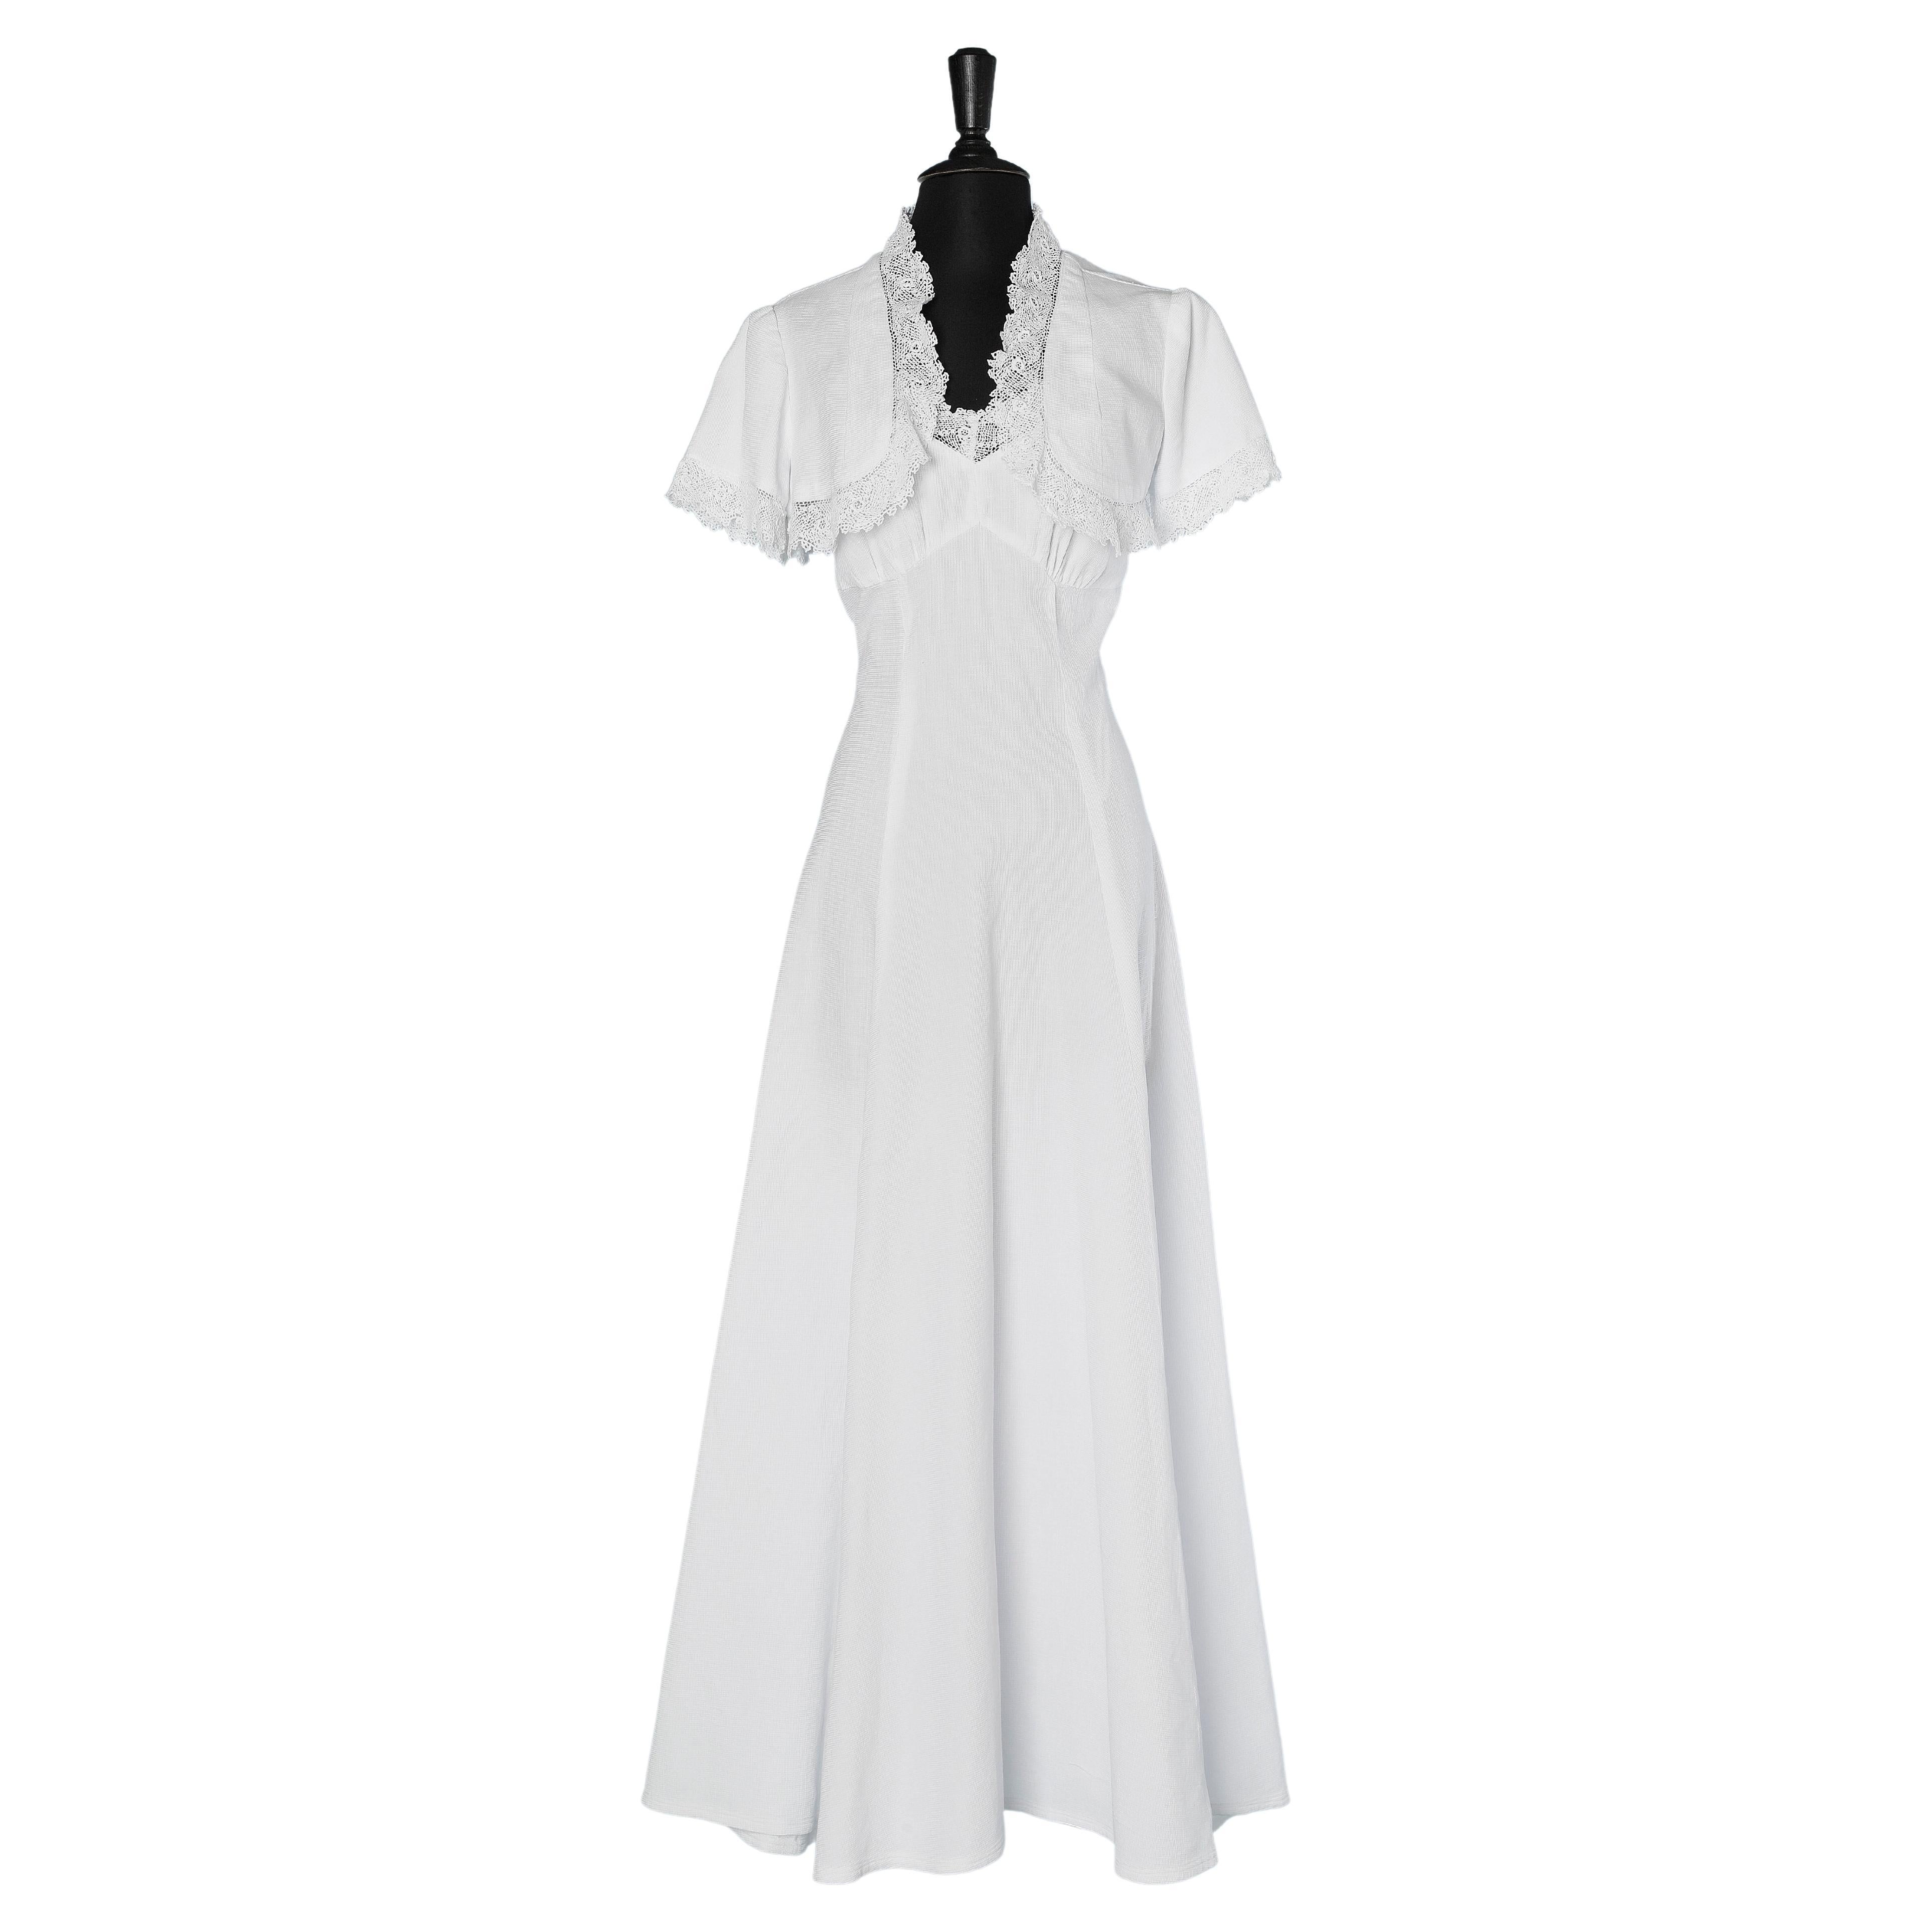 White cotton piqué wedding dress with lace edge and boléro Circa 1930 For Sale